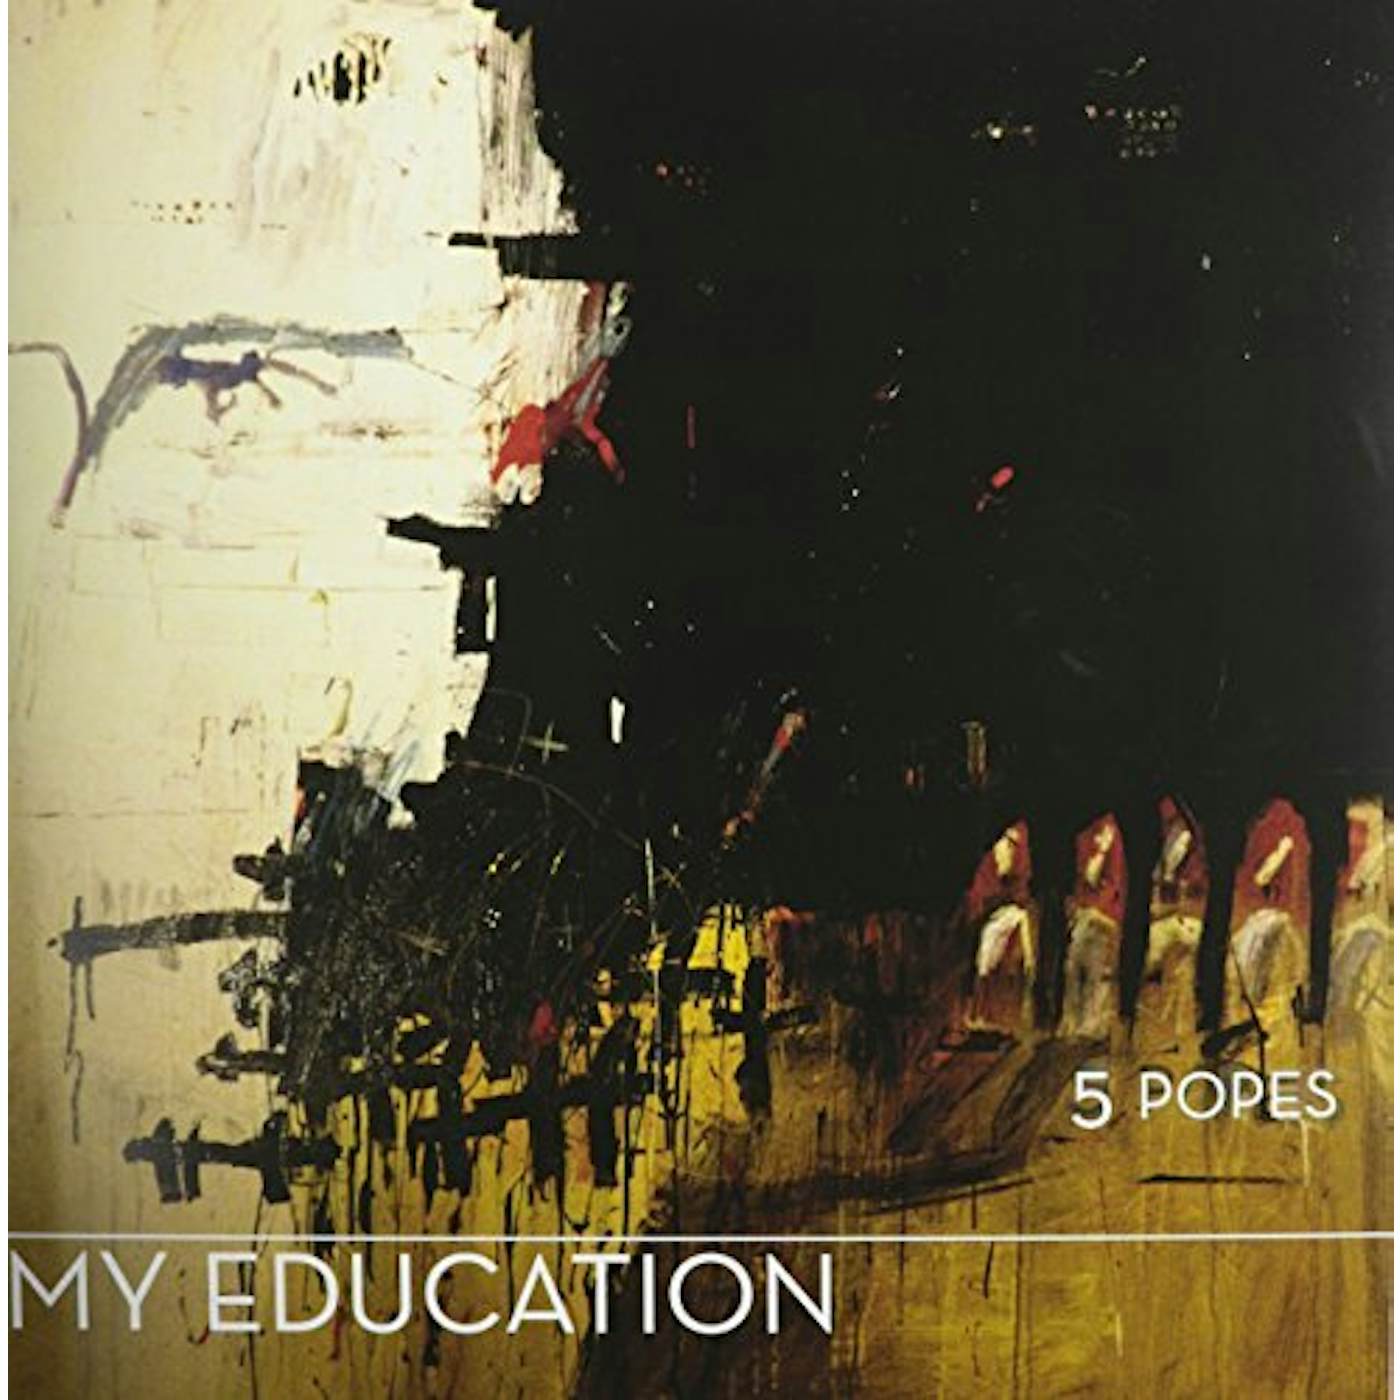 My Education 5 Popes Vinyl Record